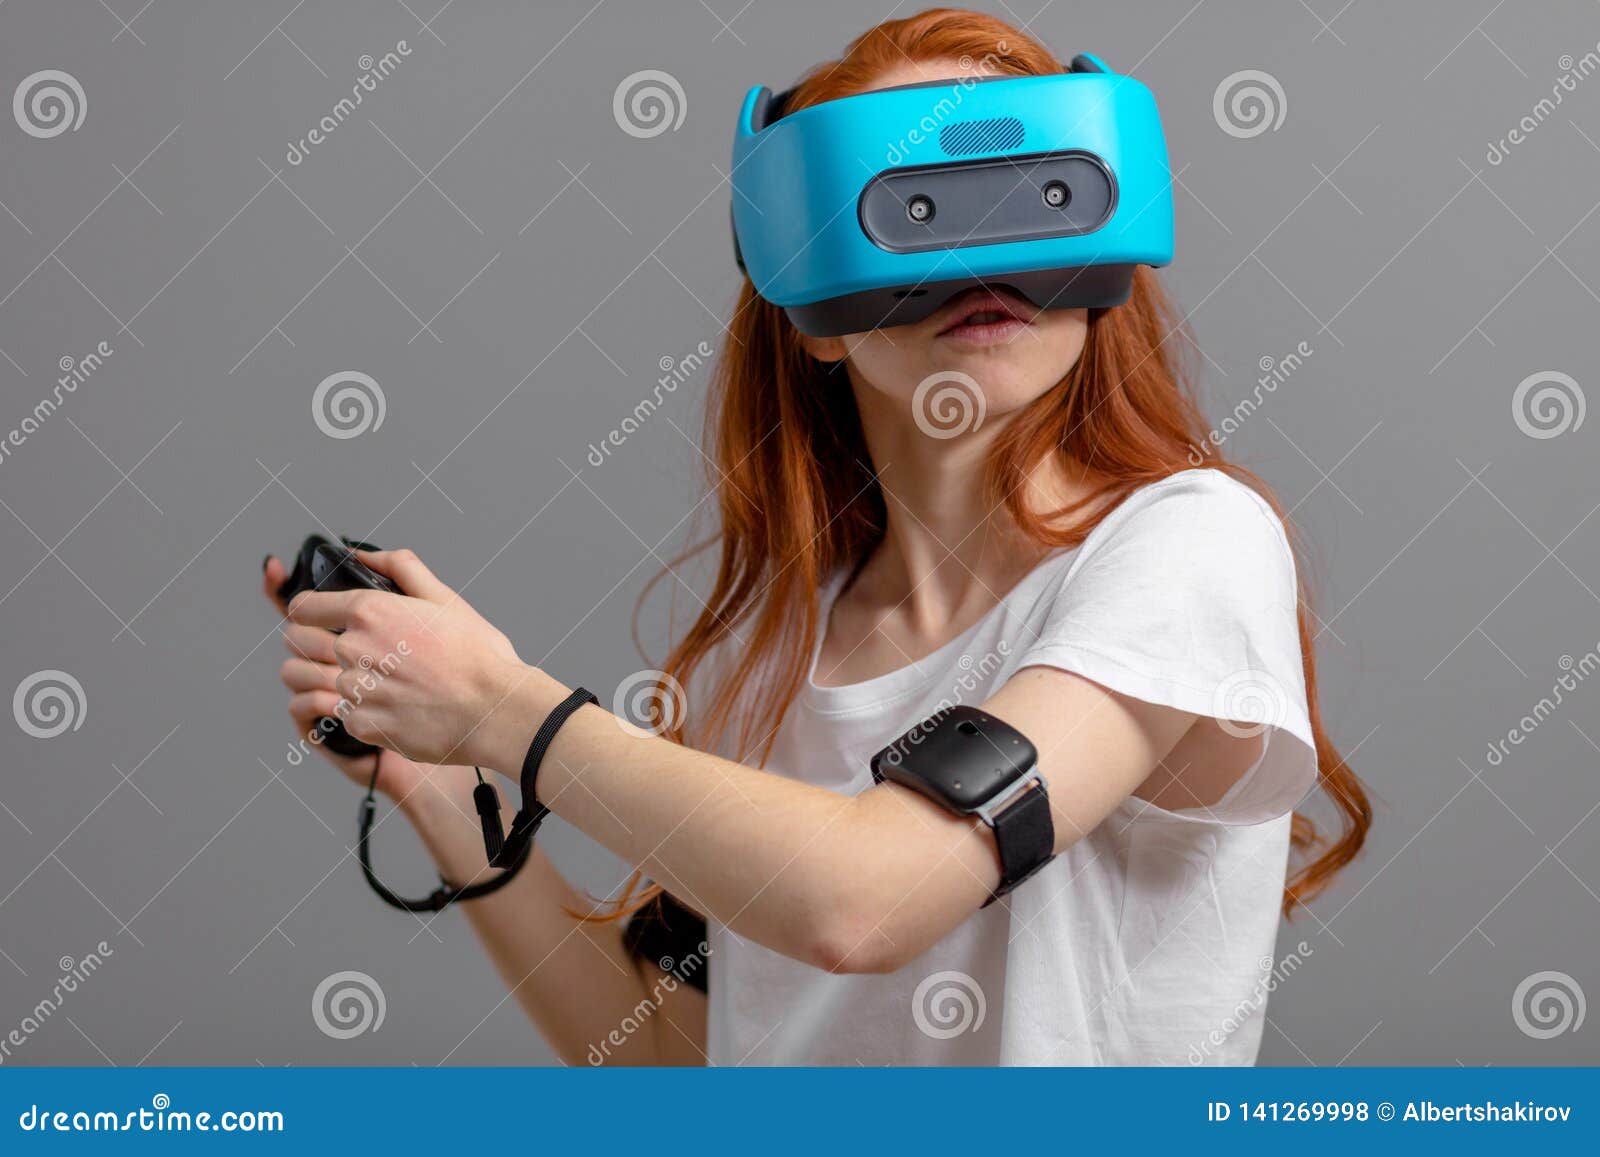 Teenager wearing a virtual reality headset - Stock Image 